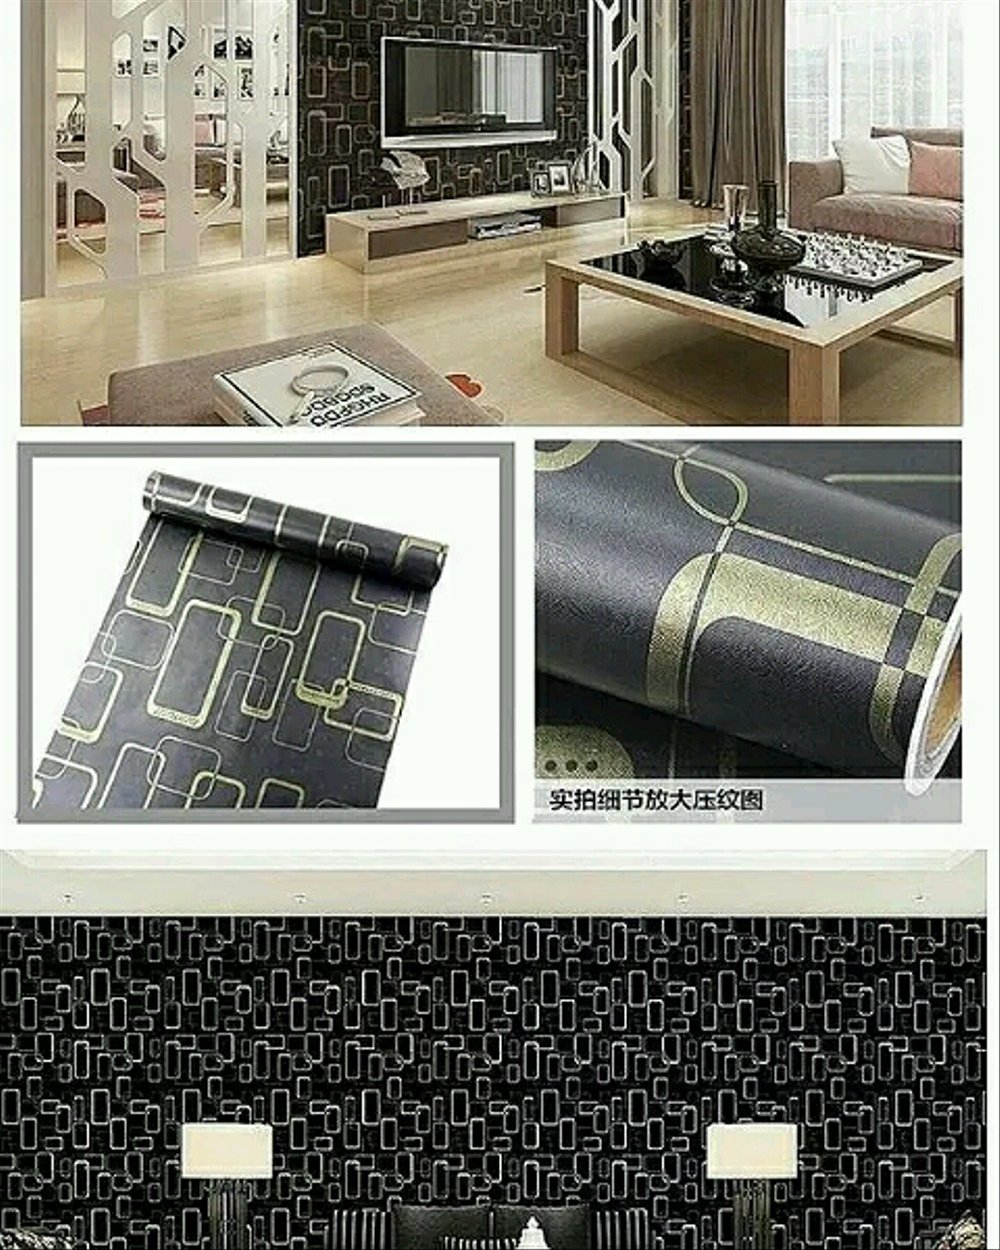 wallpaper hitam elegan,product,tile,room,floor,architecture